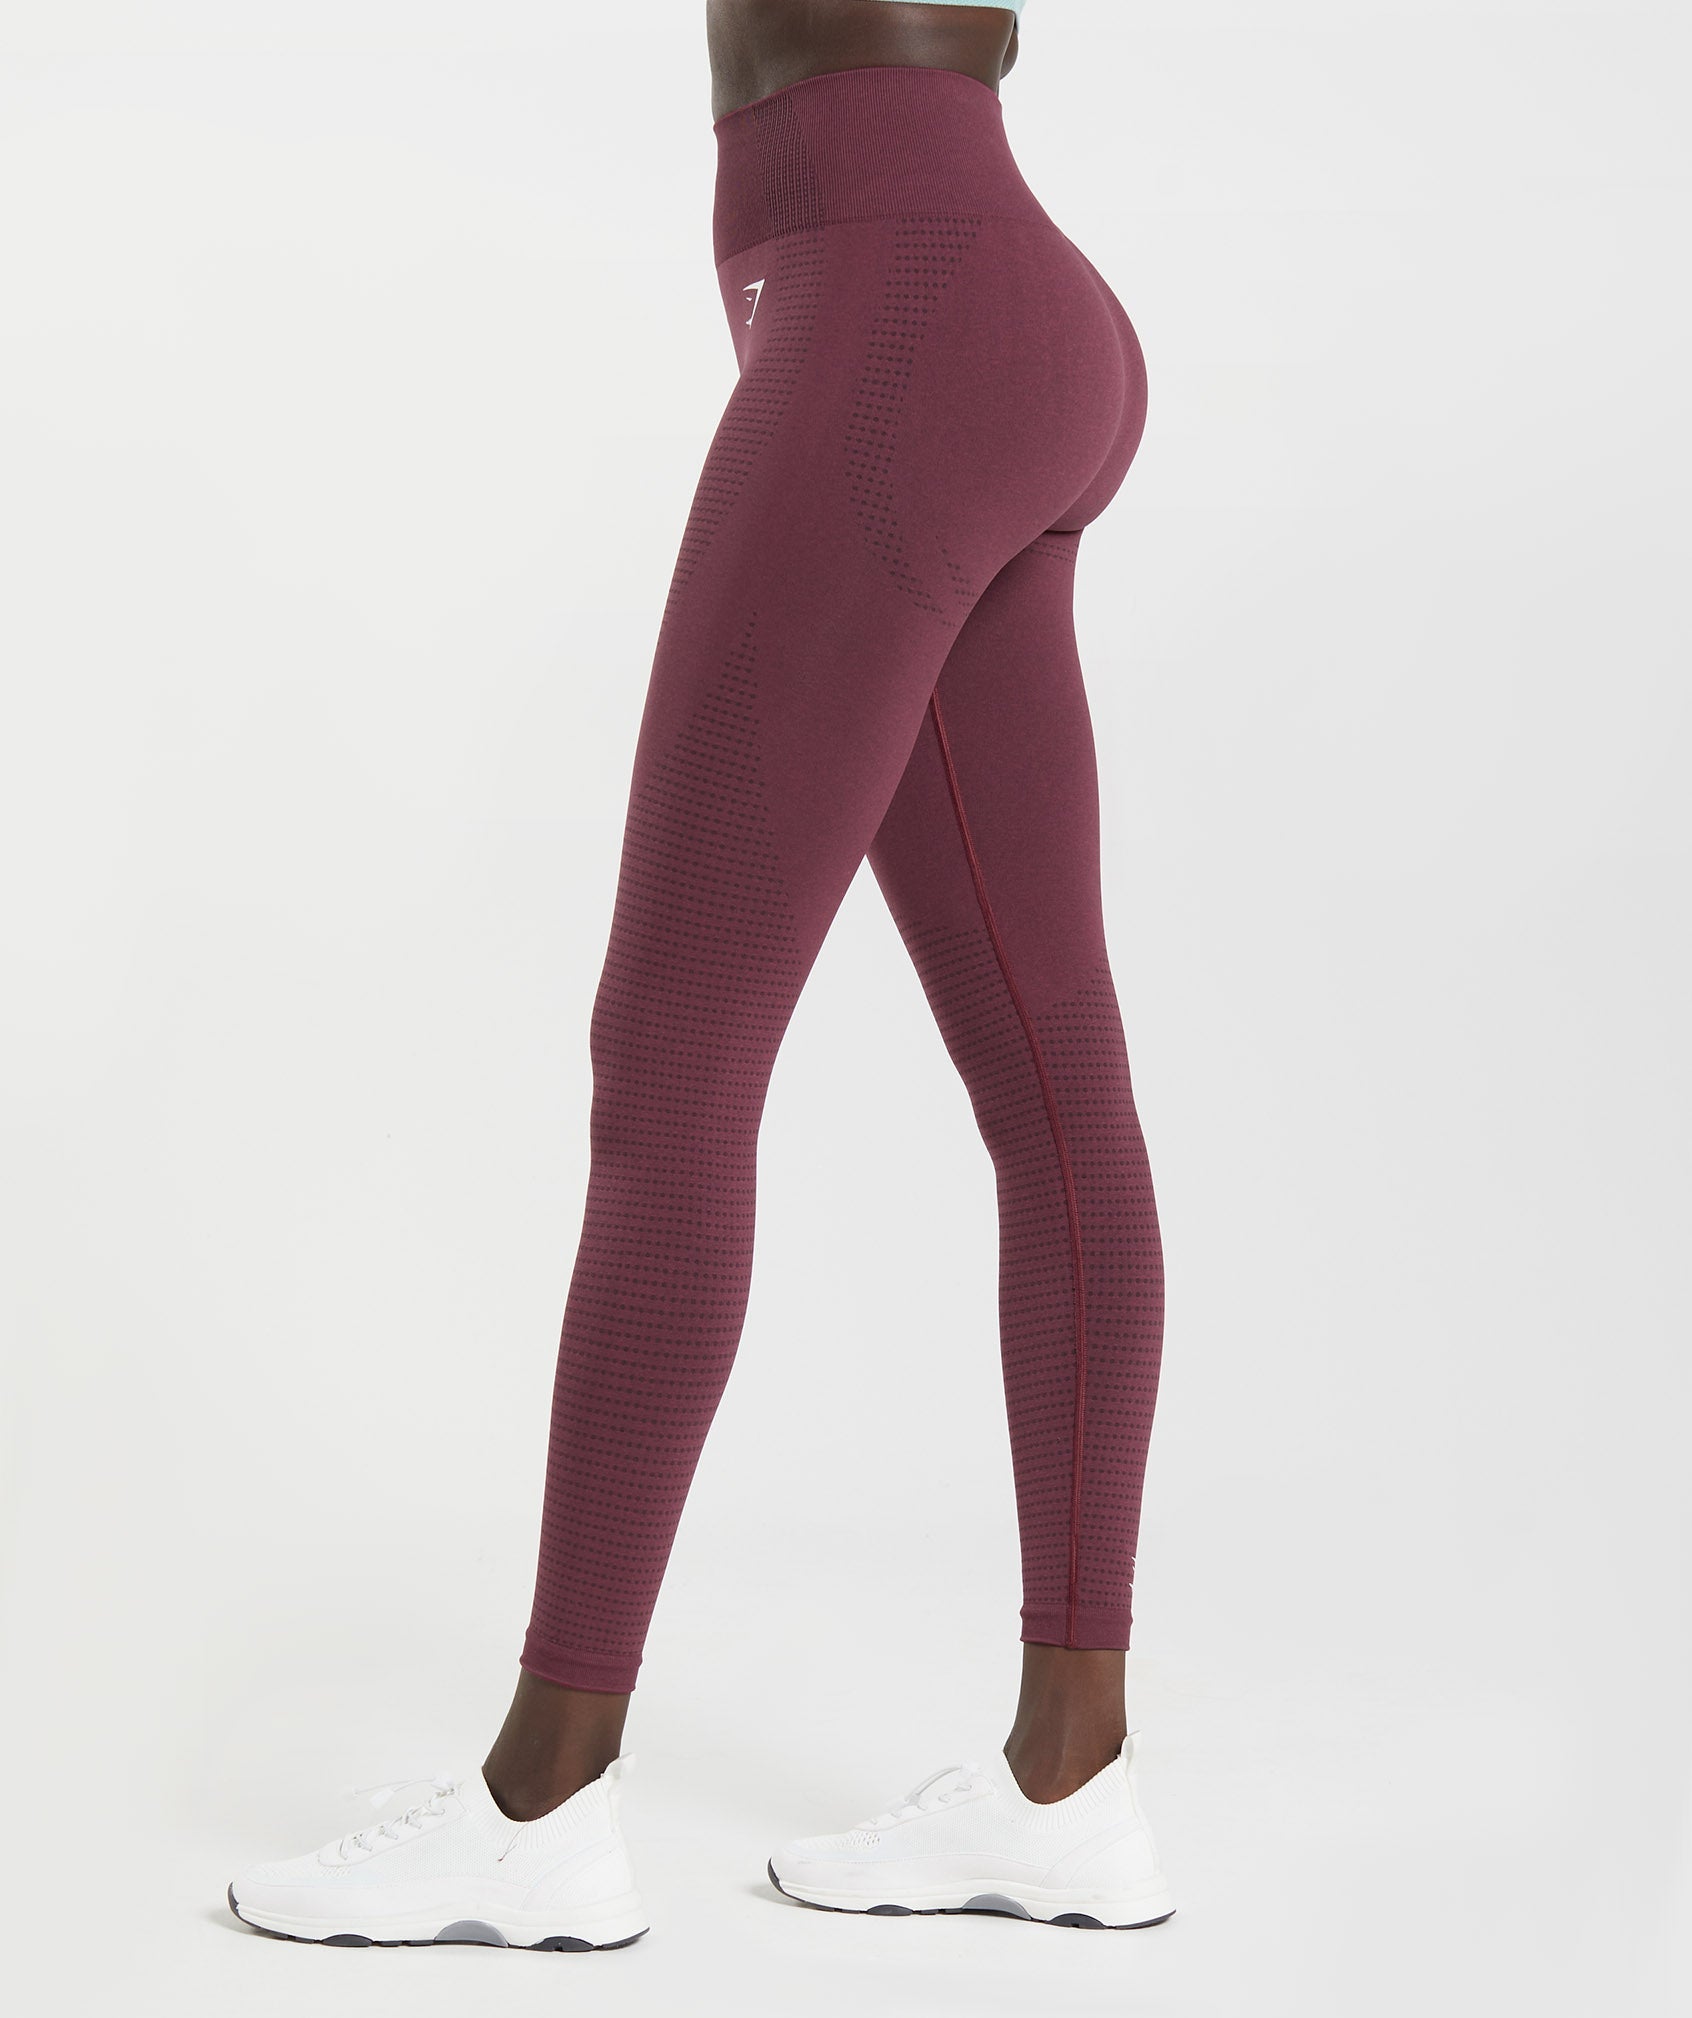 Gymshark Flex Leggings - Burgundy Marl, Women's Fashion